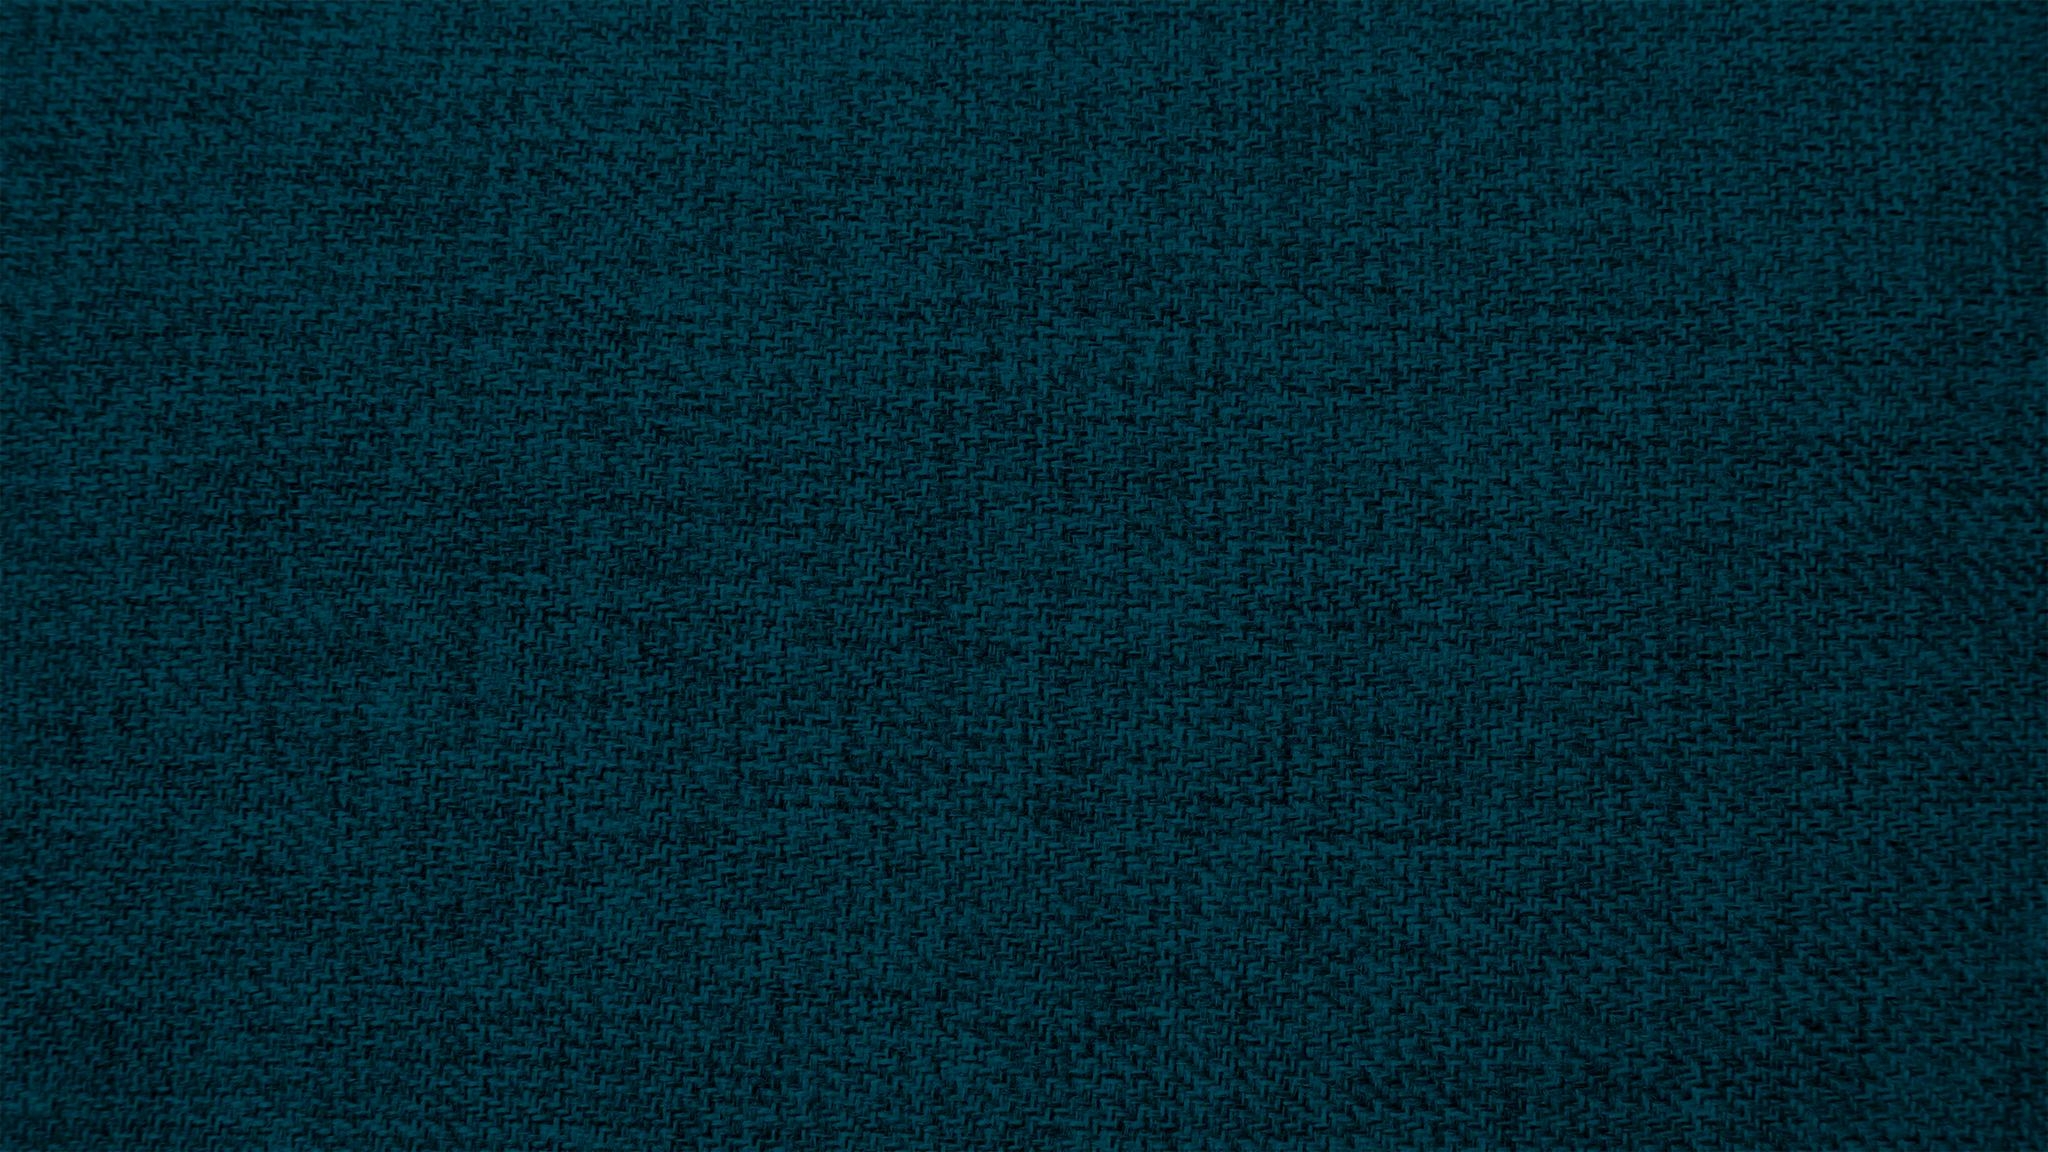 Blue Decorative Mid Century Modern Knife Edge Pillows 18 x 18 (Set of 2) - Key Largo Zenith Teal - Image 2